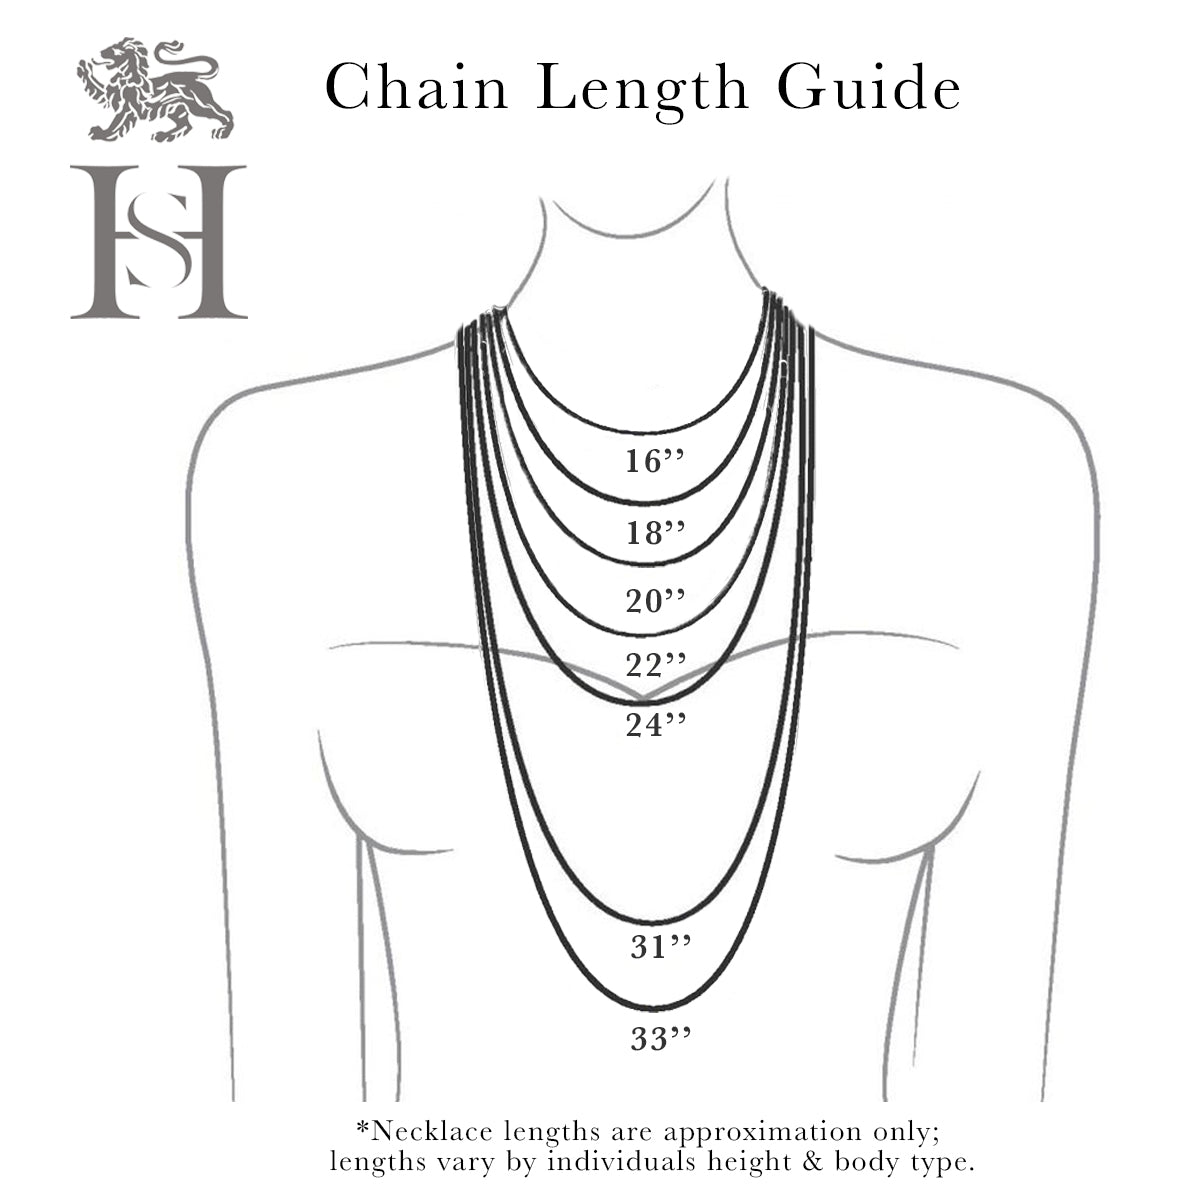 Ladies chain lengths
